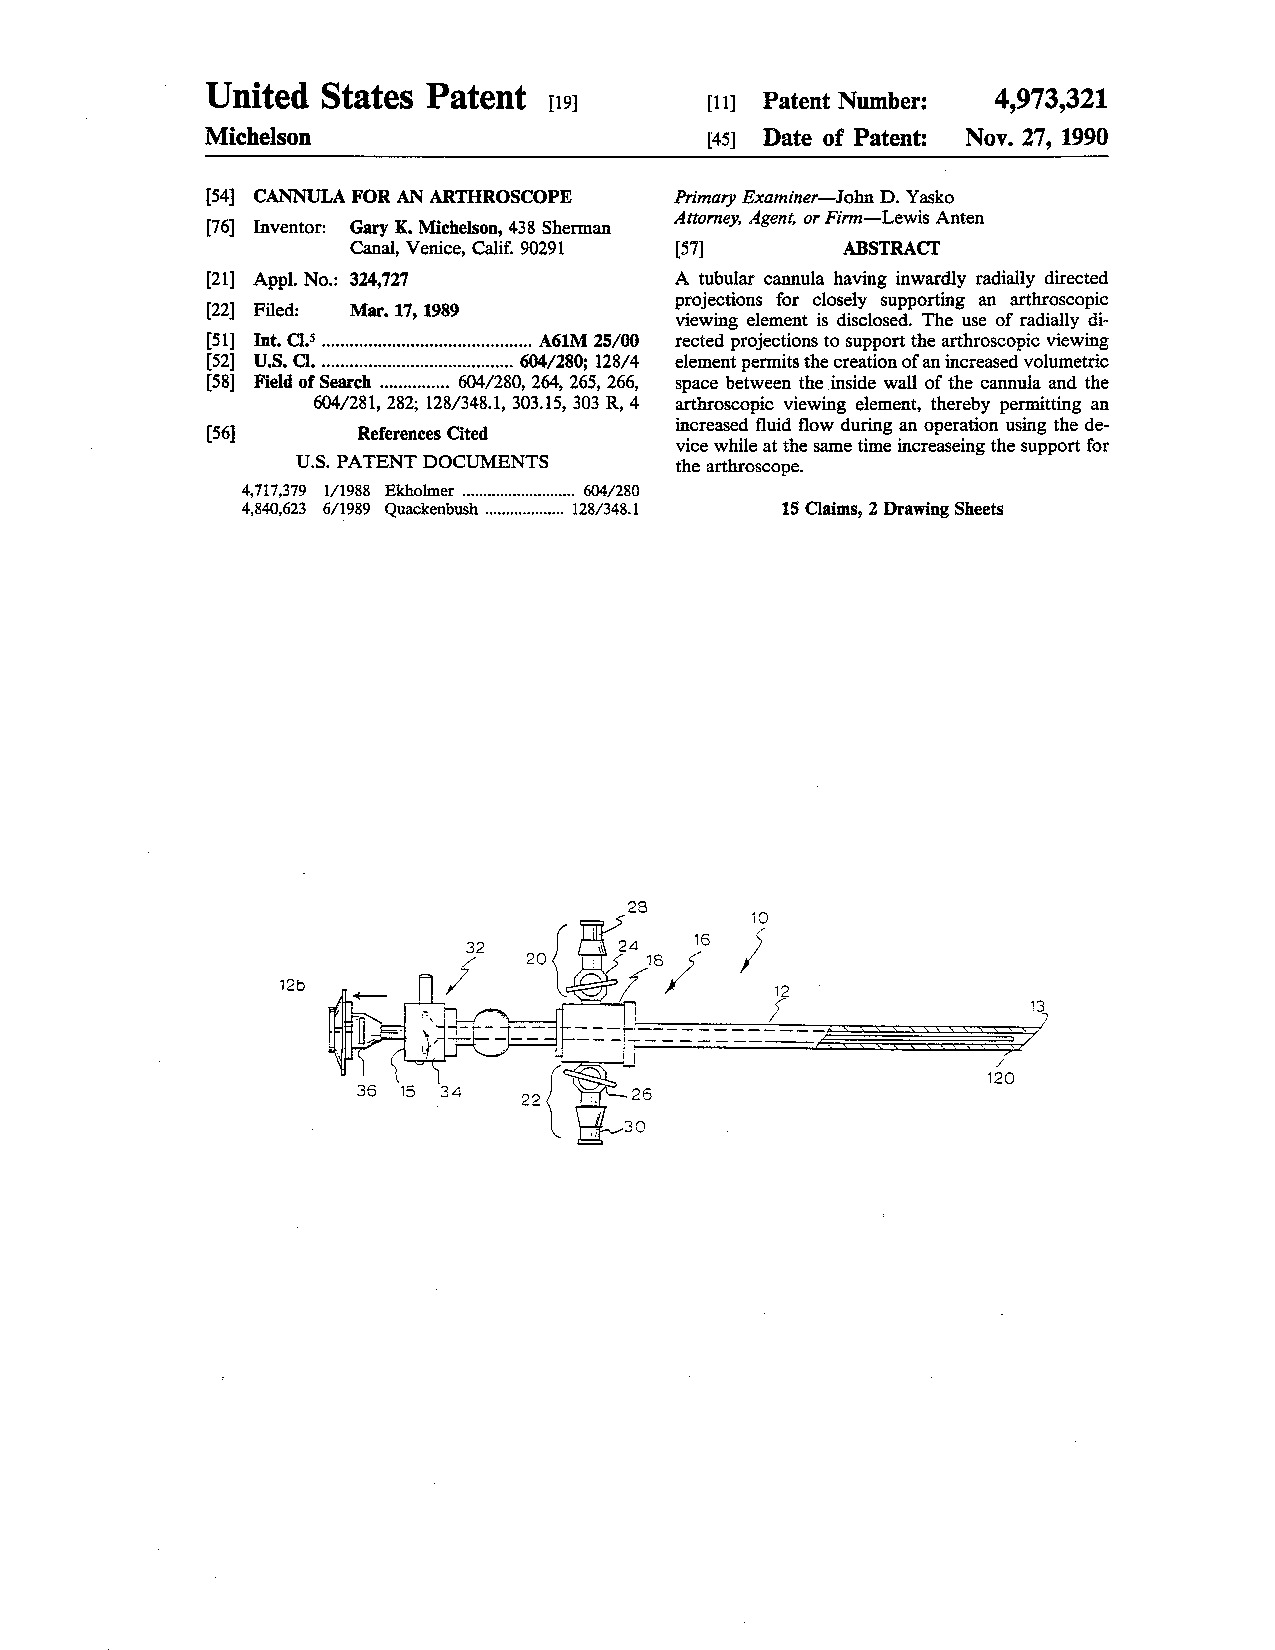 Cannula for an arthroscope - Patent 4,973,321